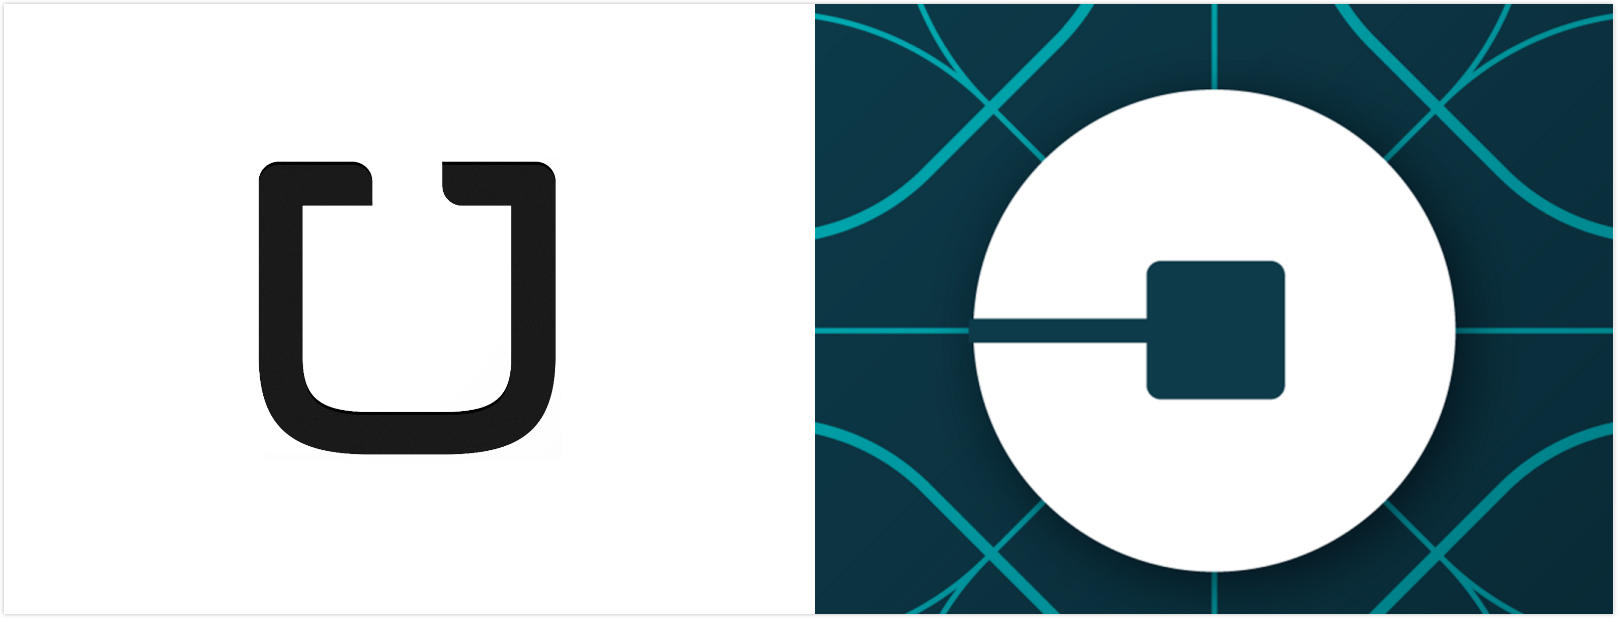 Uber品牌重塑，换了铜钱似的新logo